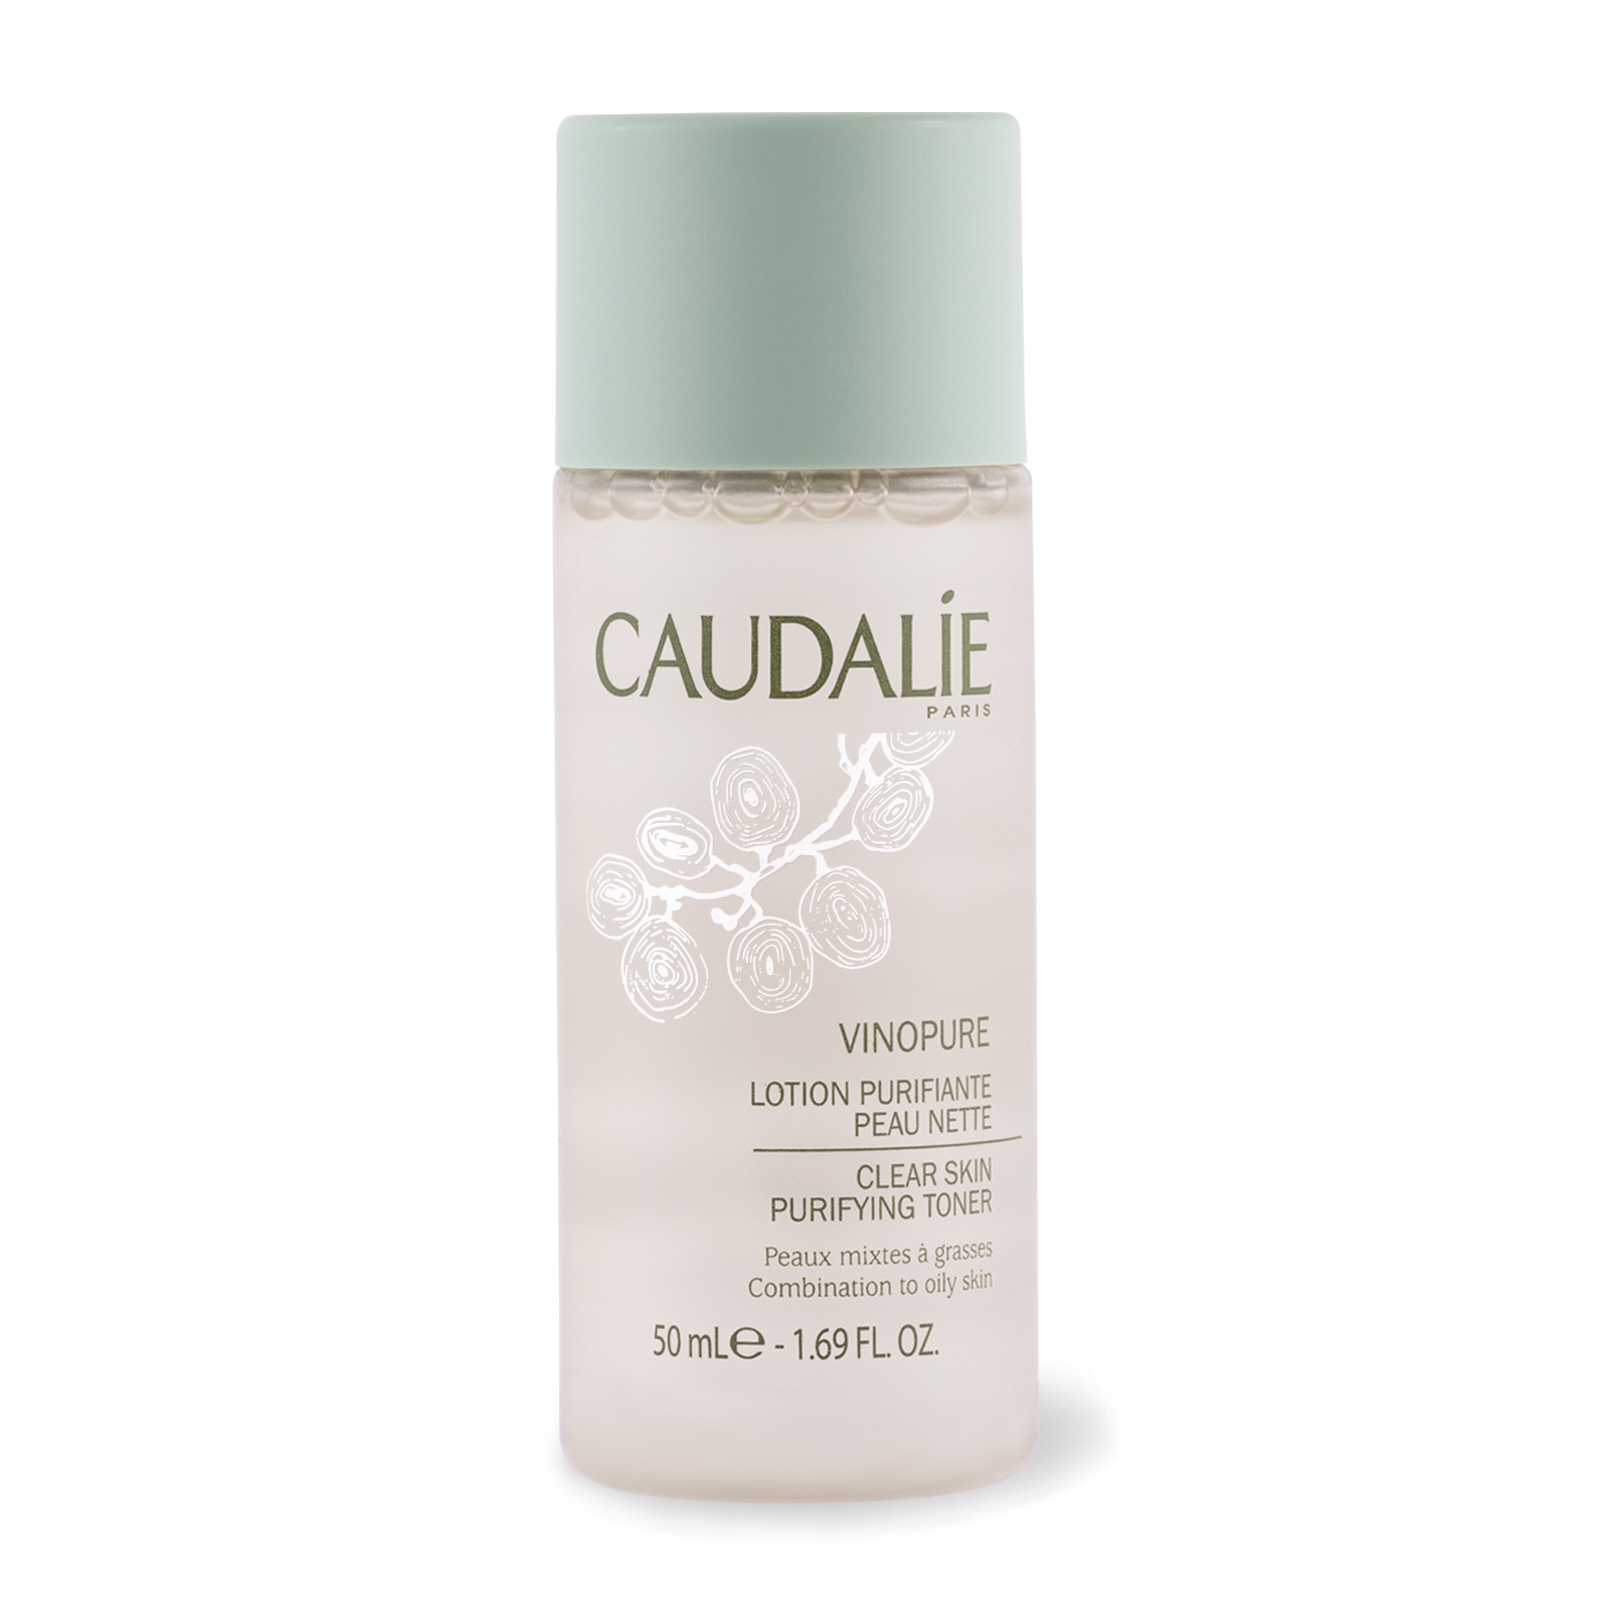 Caudalie Vinopure Clear Skin Purifying Toner 50ml - HK